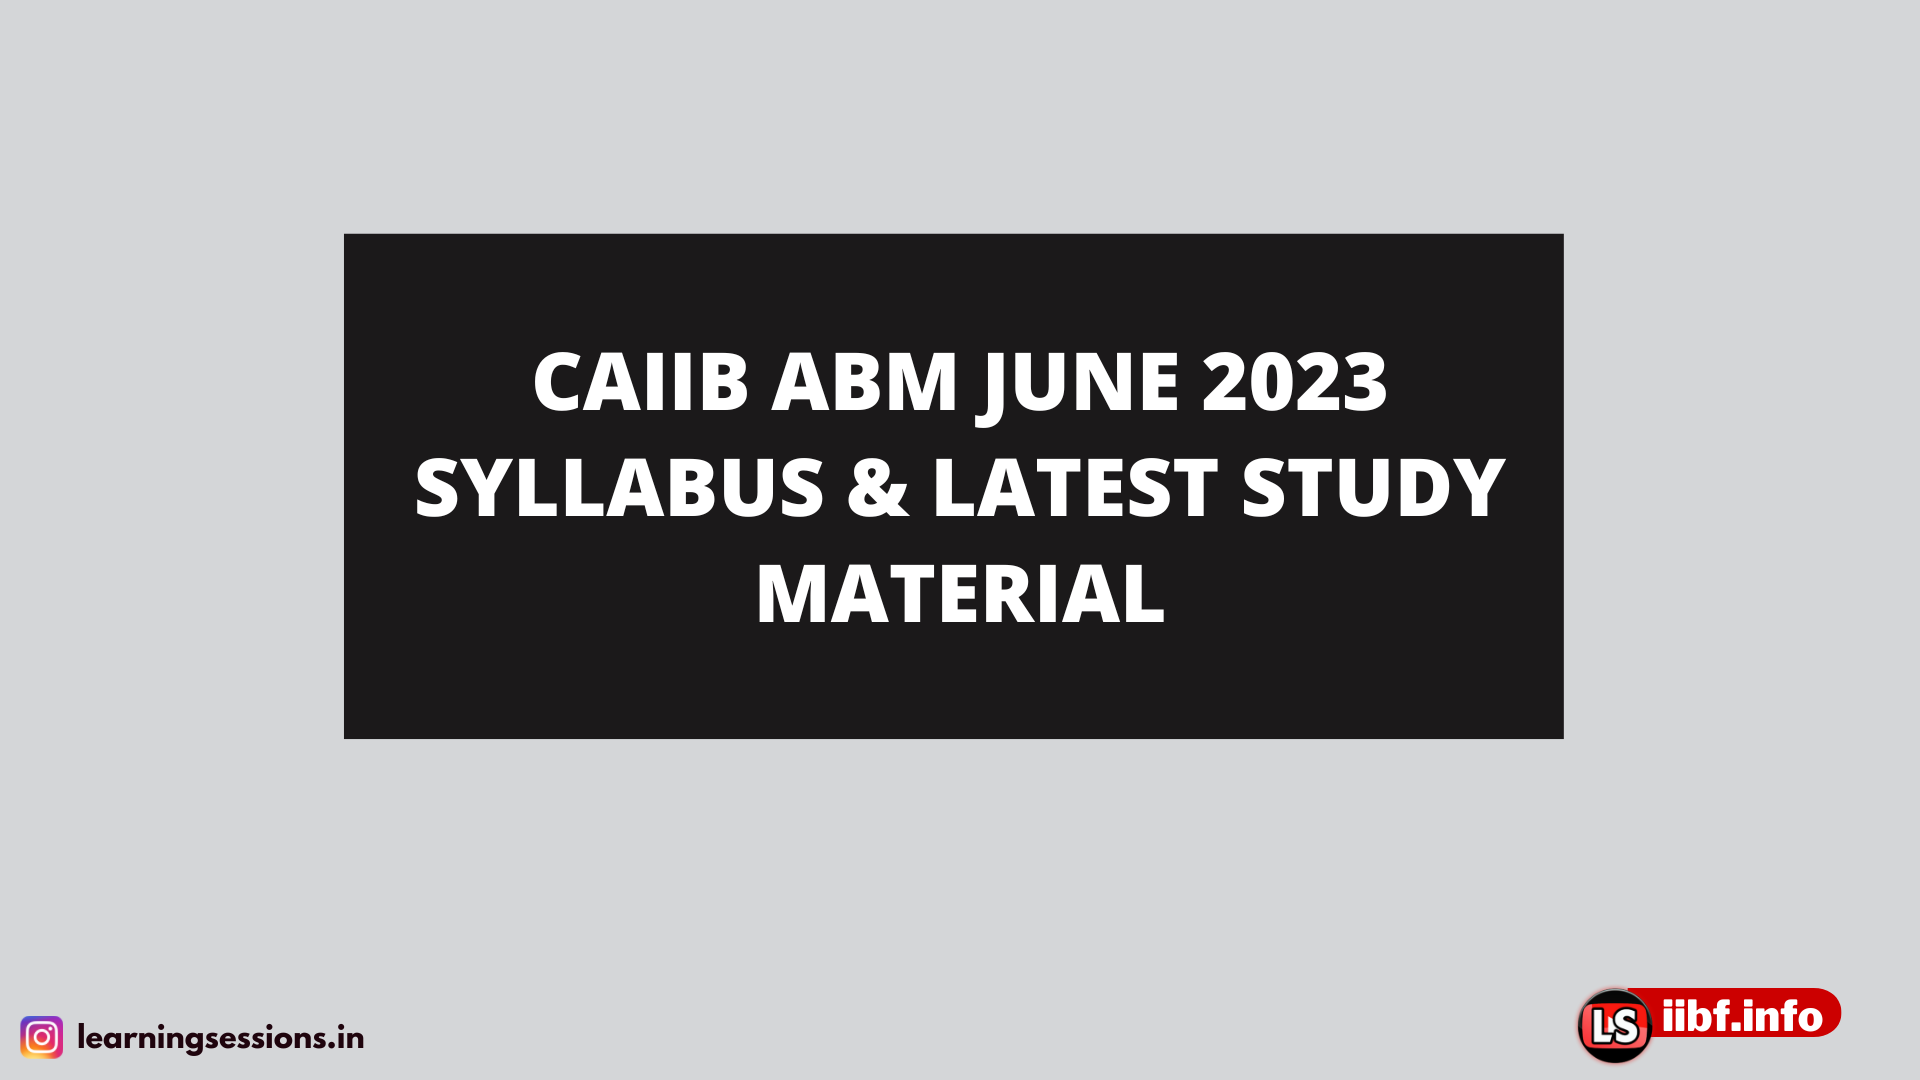 CAIIB ABM SYLLABUS & LATEST STUDY MATERIAL